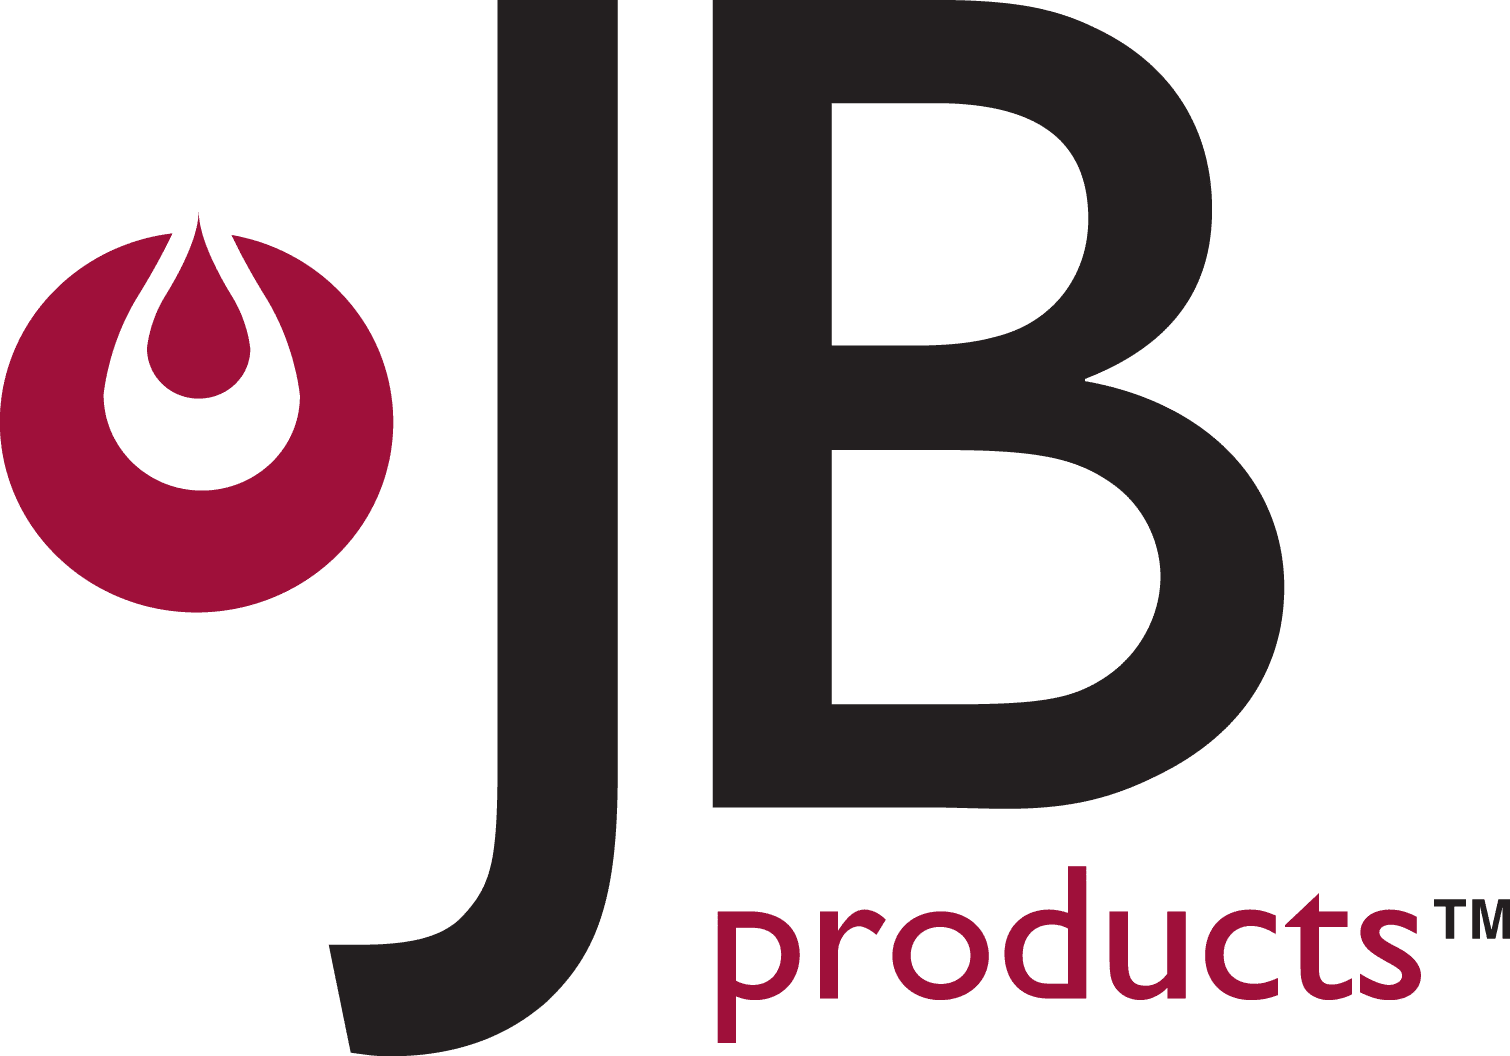 J&B Products Inc.